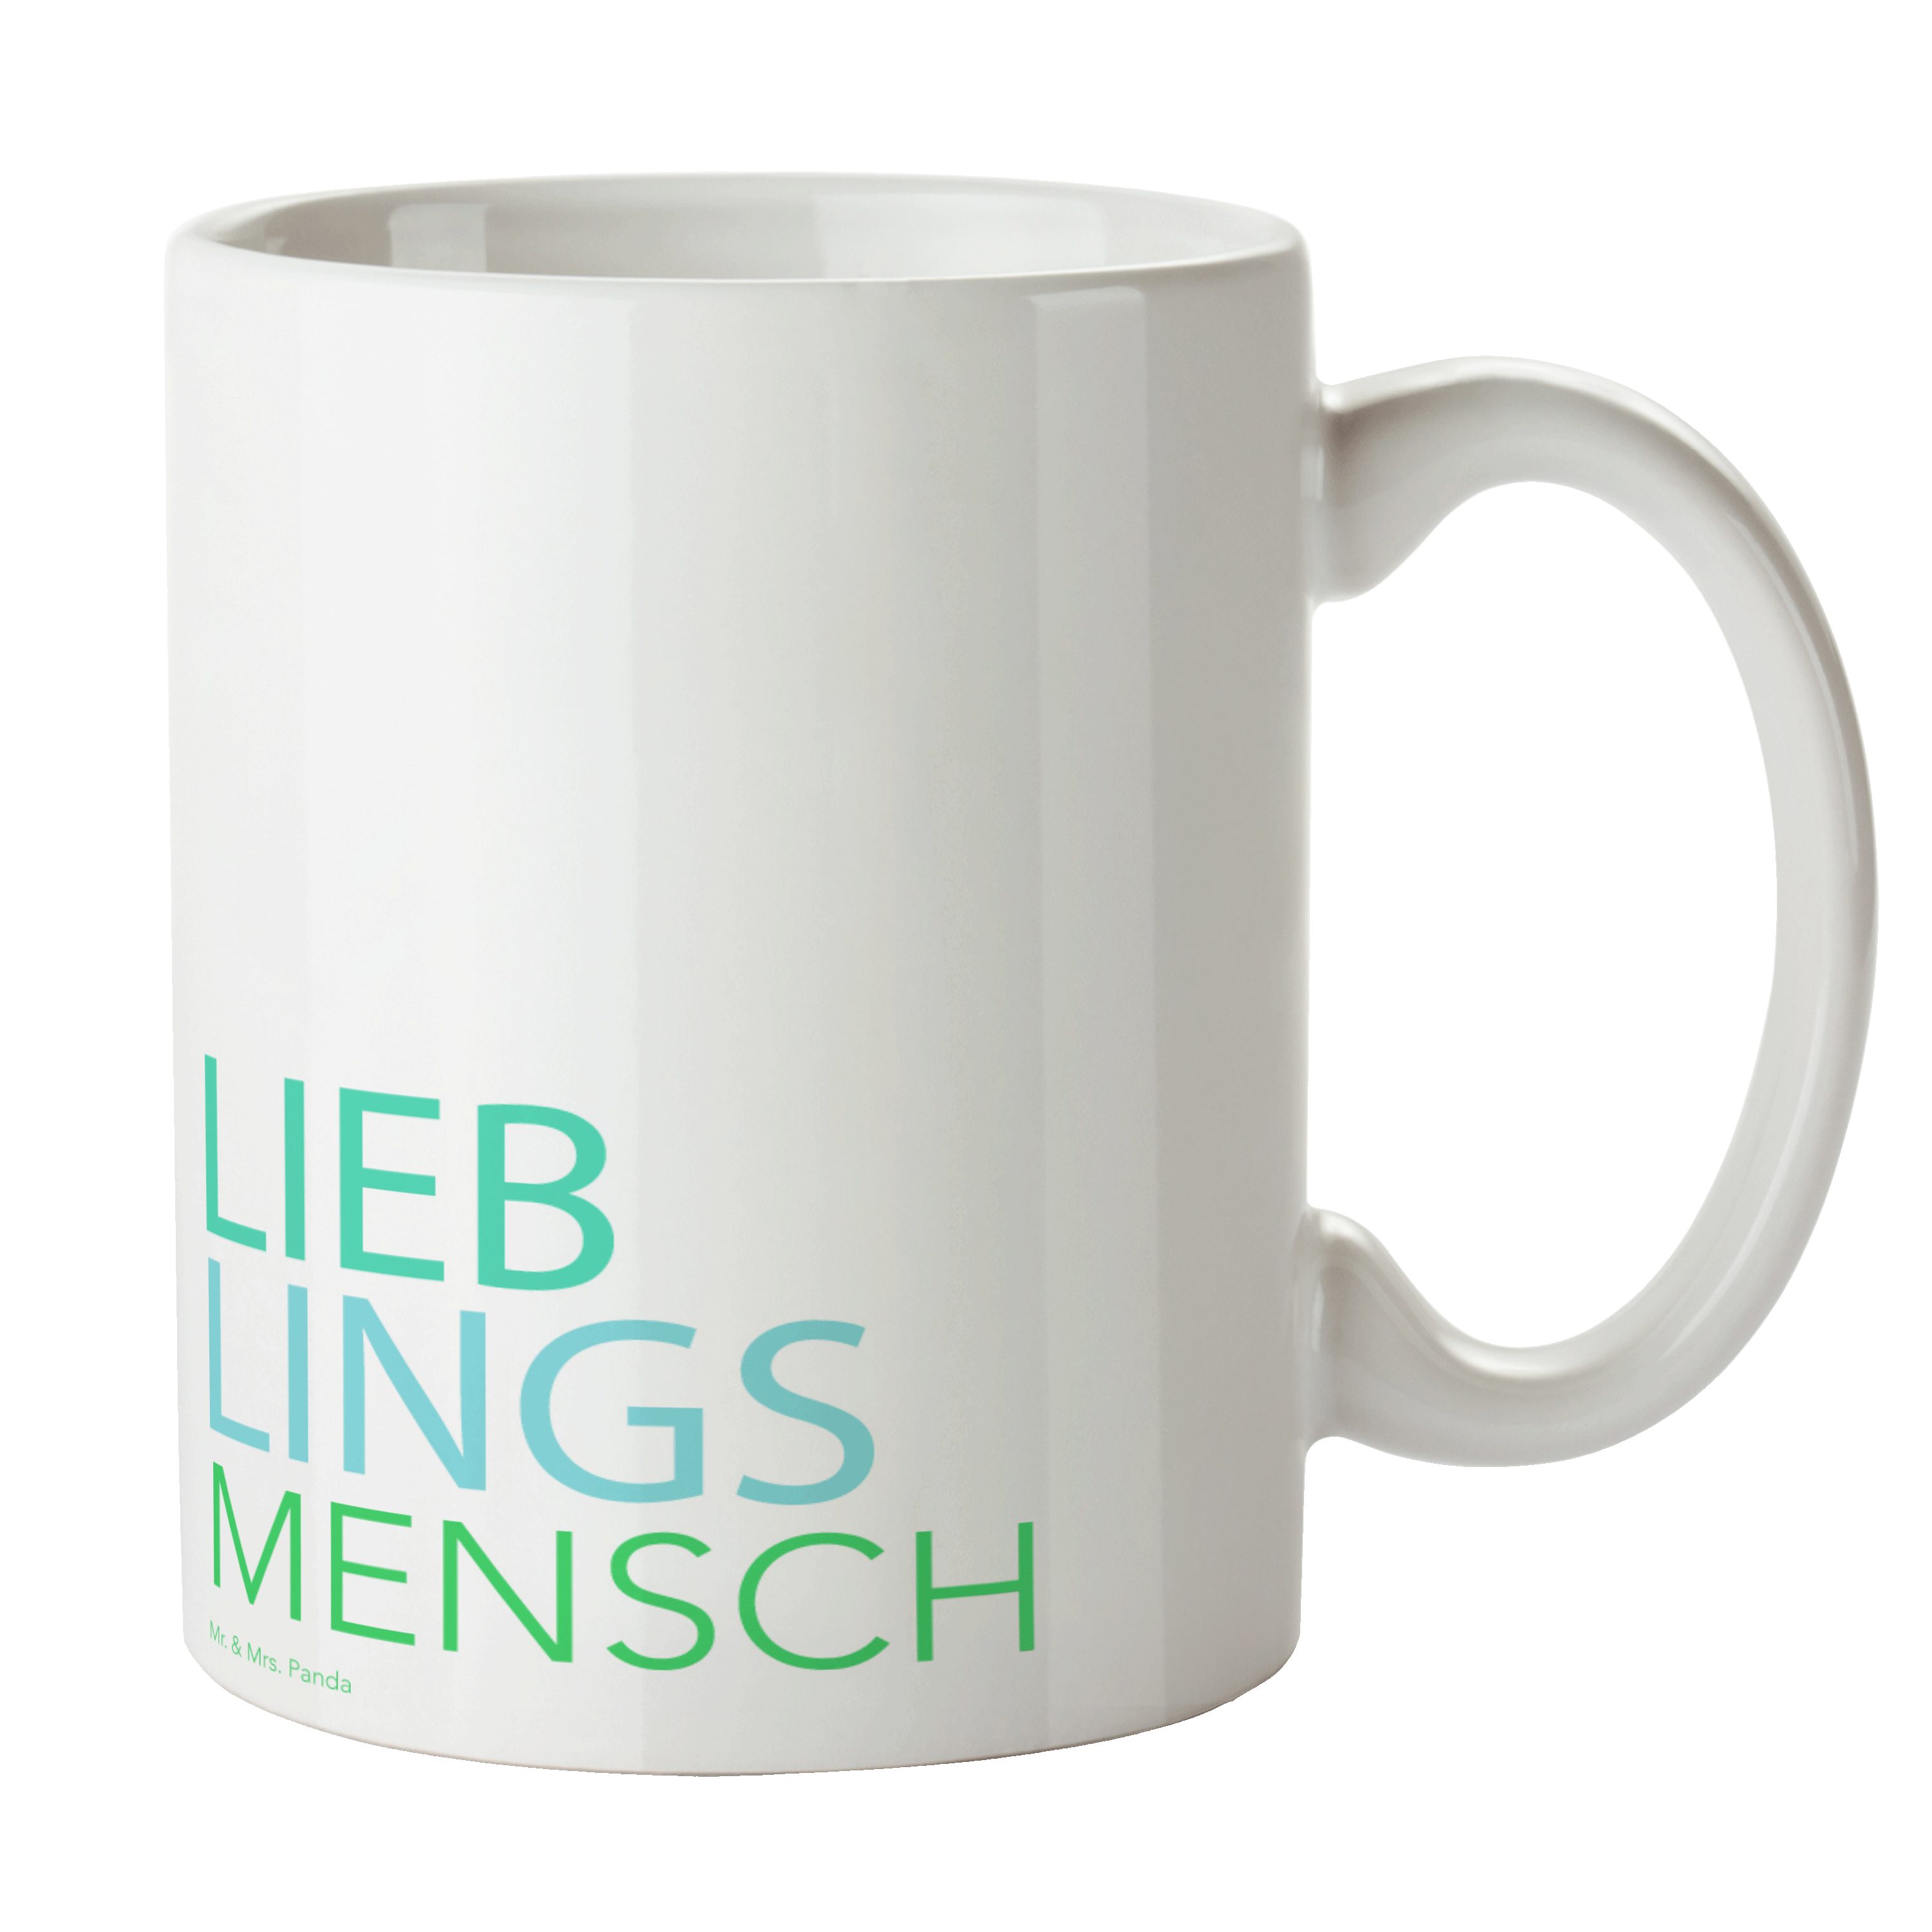 Mr. & Mrs. Panda Mensch - Mensch, Geschenk, Keramik Weiß - Spruch, Lieblings Tasse Liebe, Teetasse